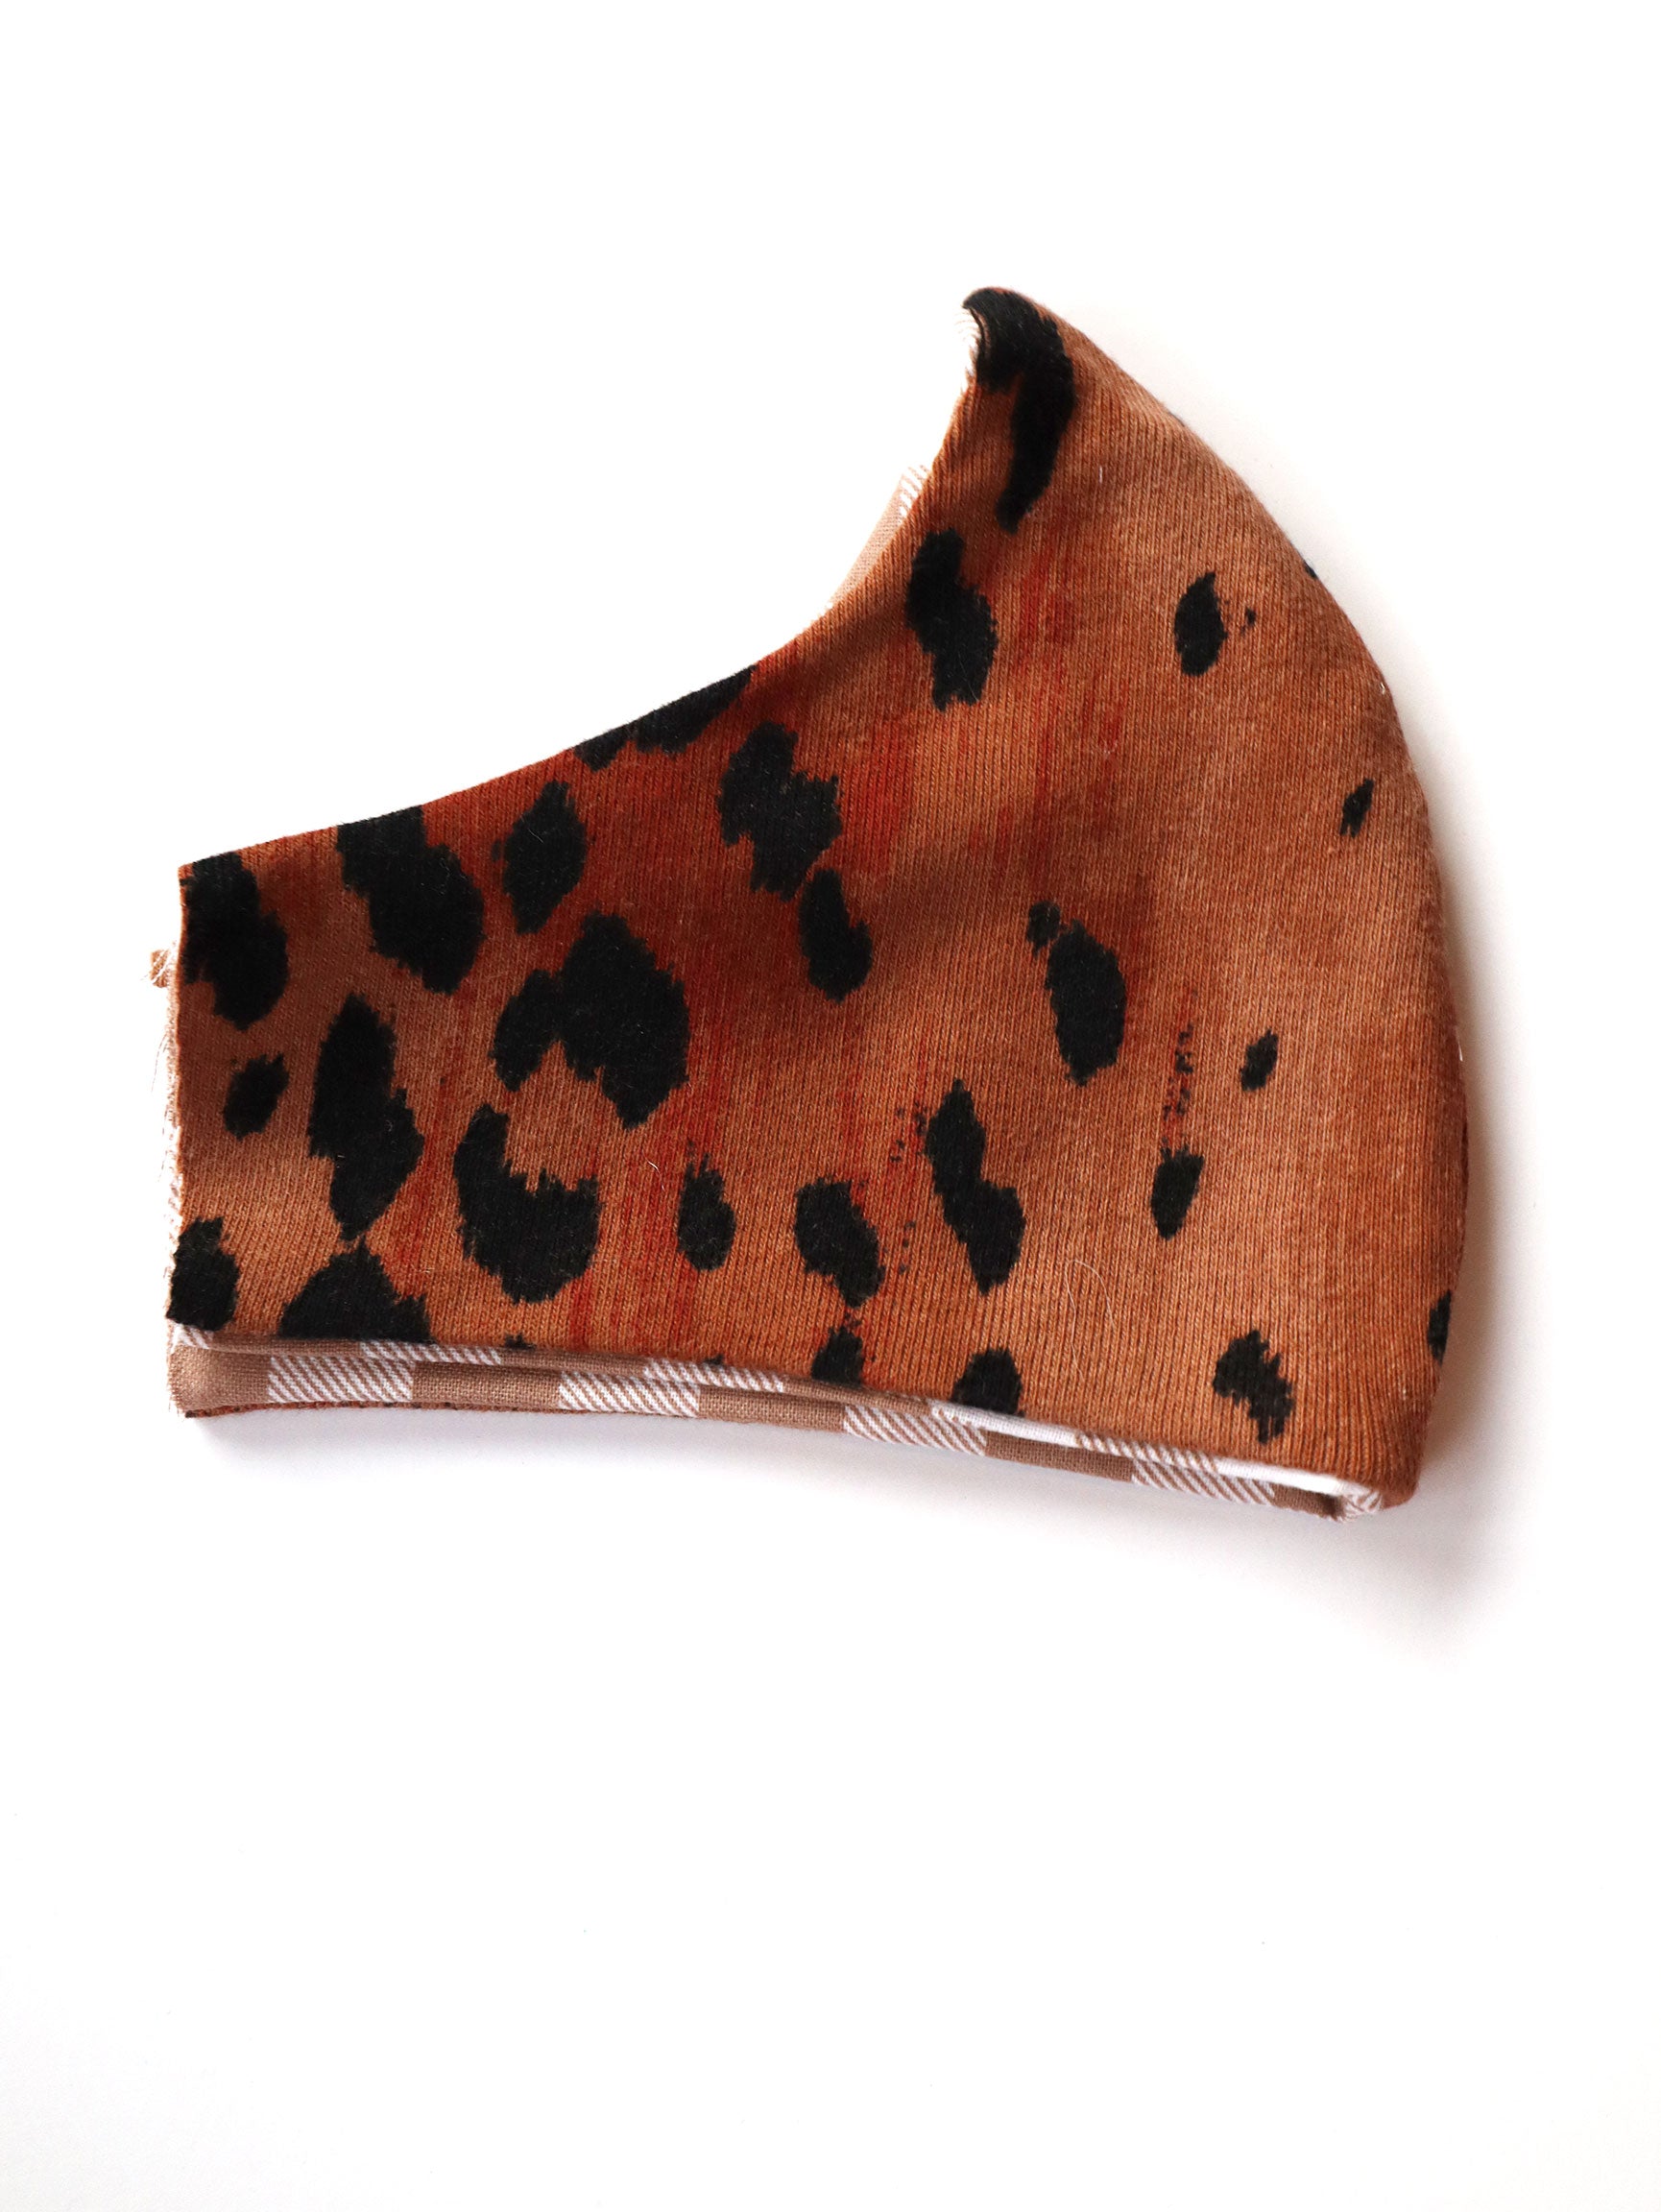 Reversible Leopard Print/Polka Dot Mask (varying prints)